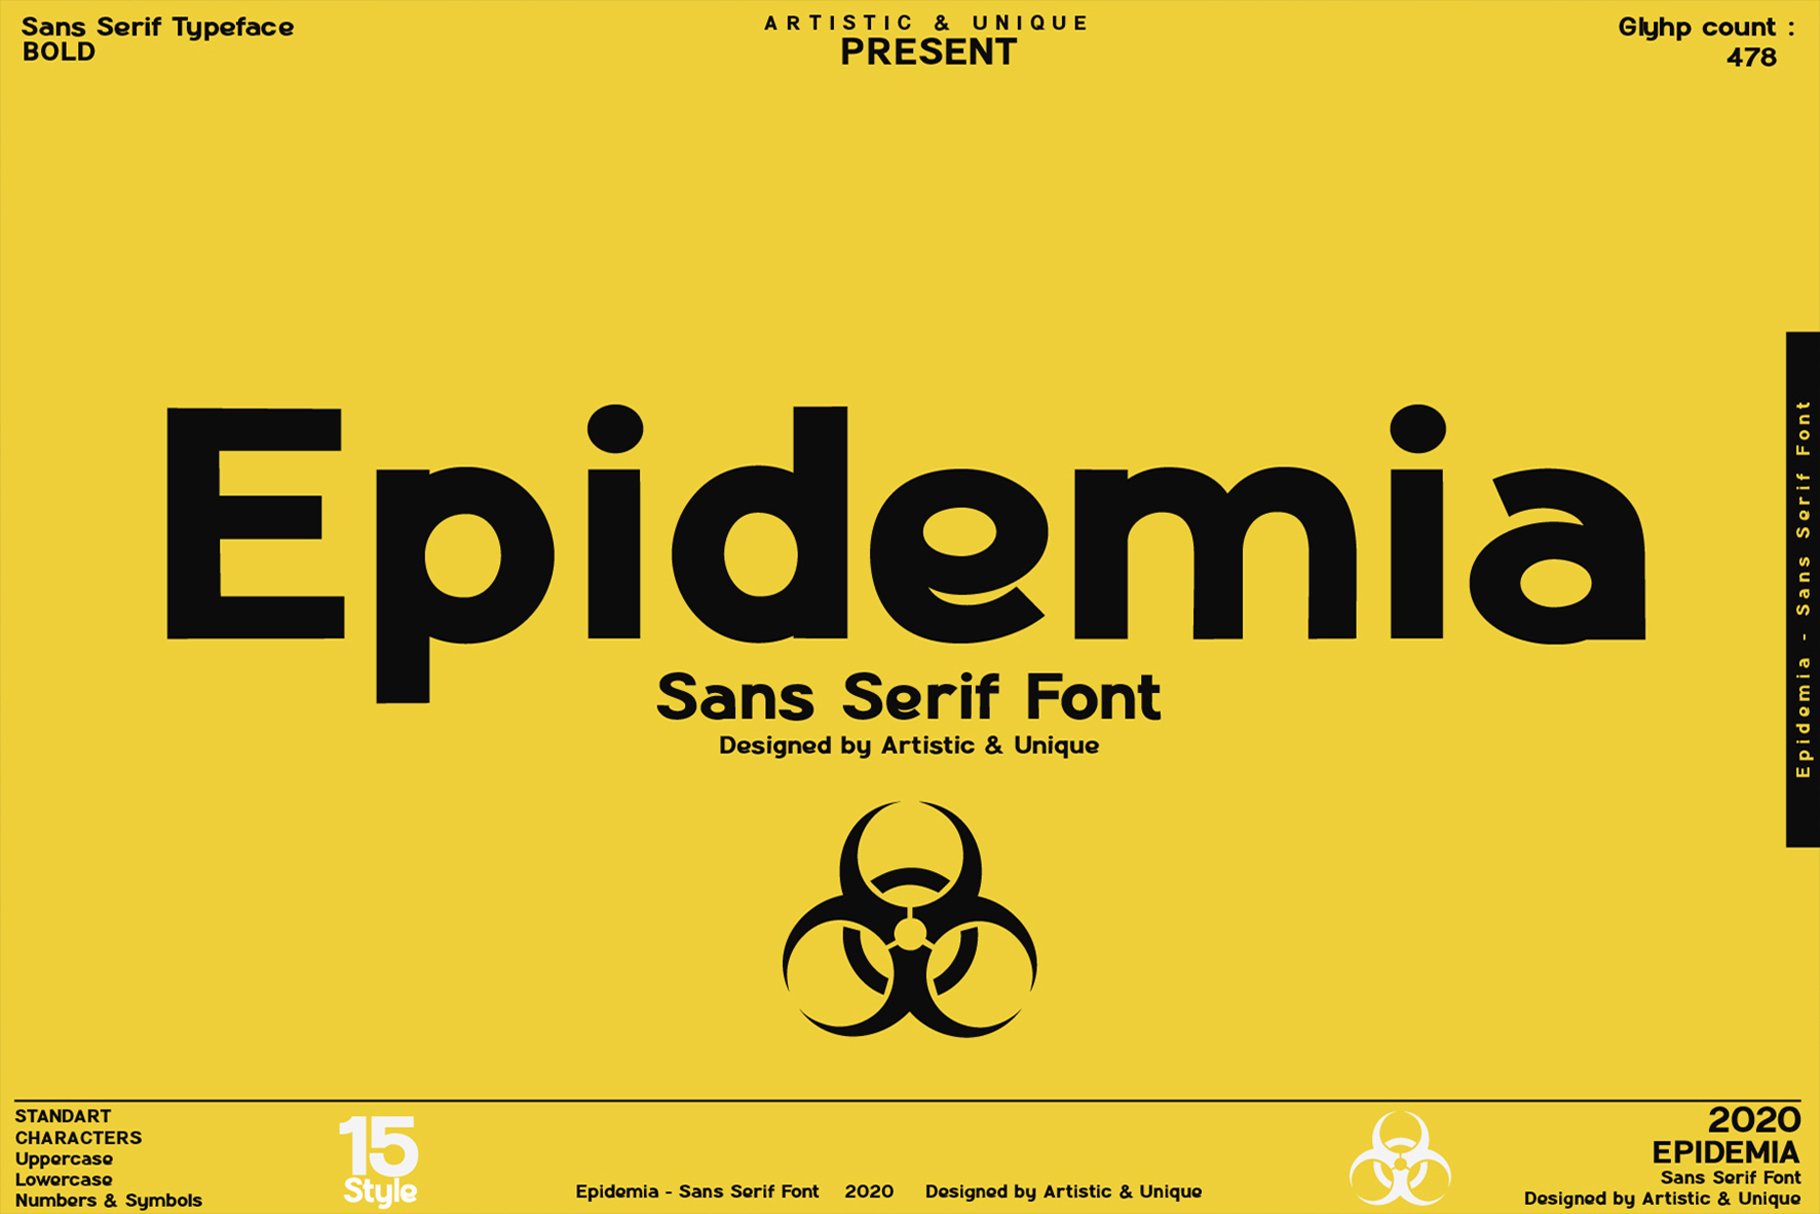 Epidemia - Sans Serif Font Family cover image.